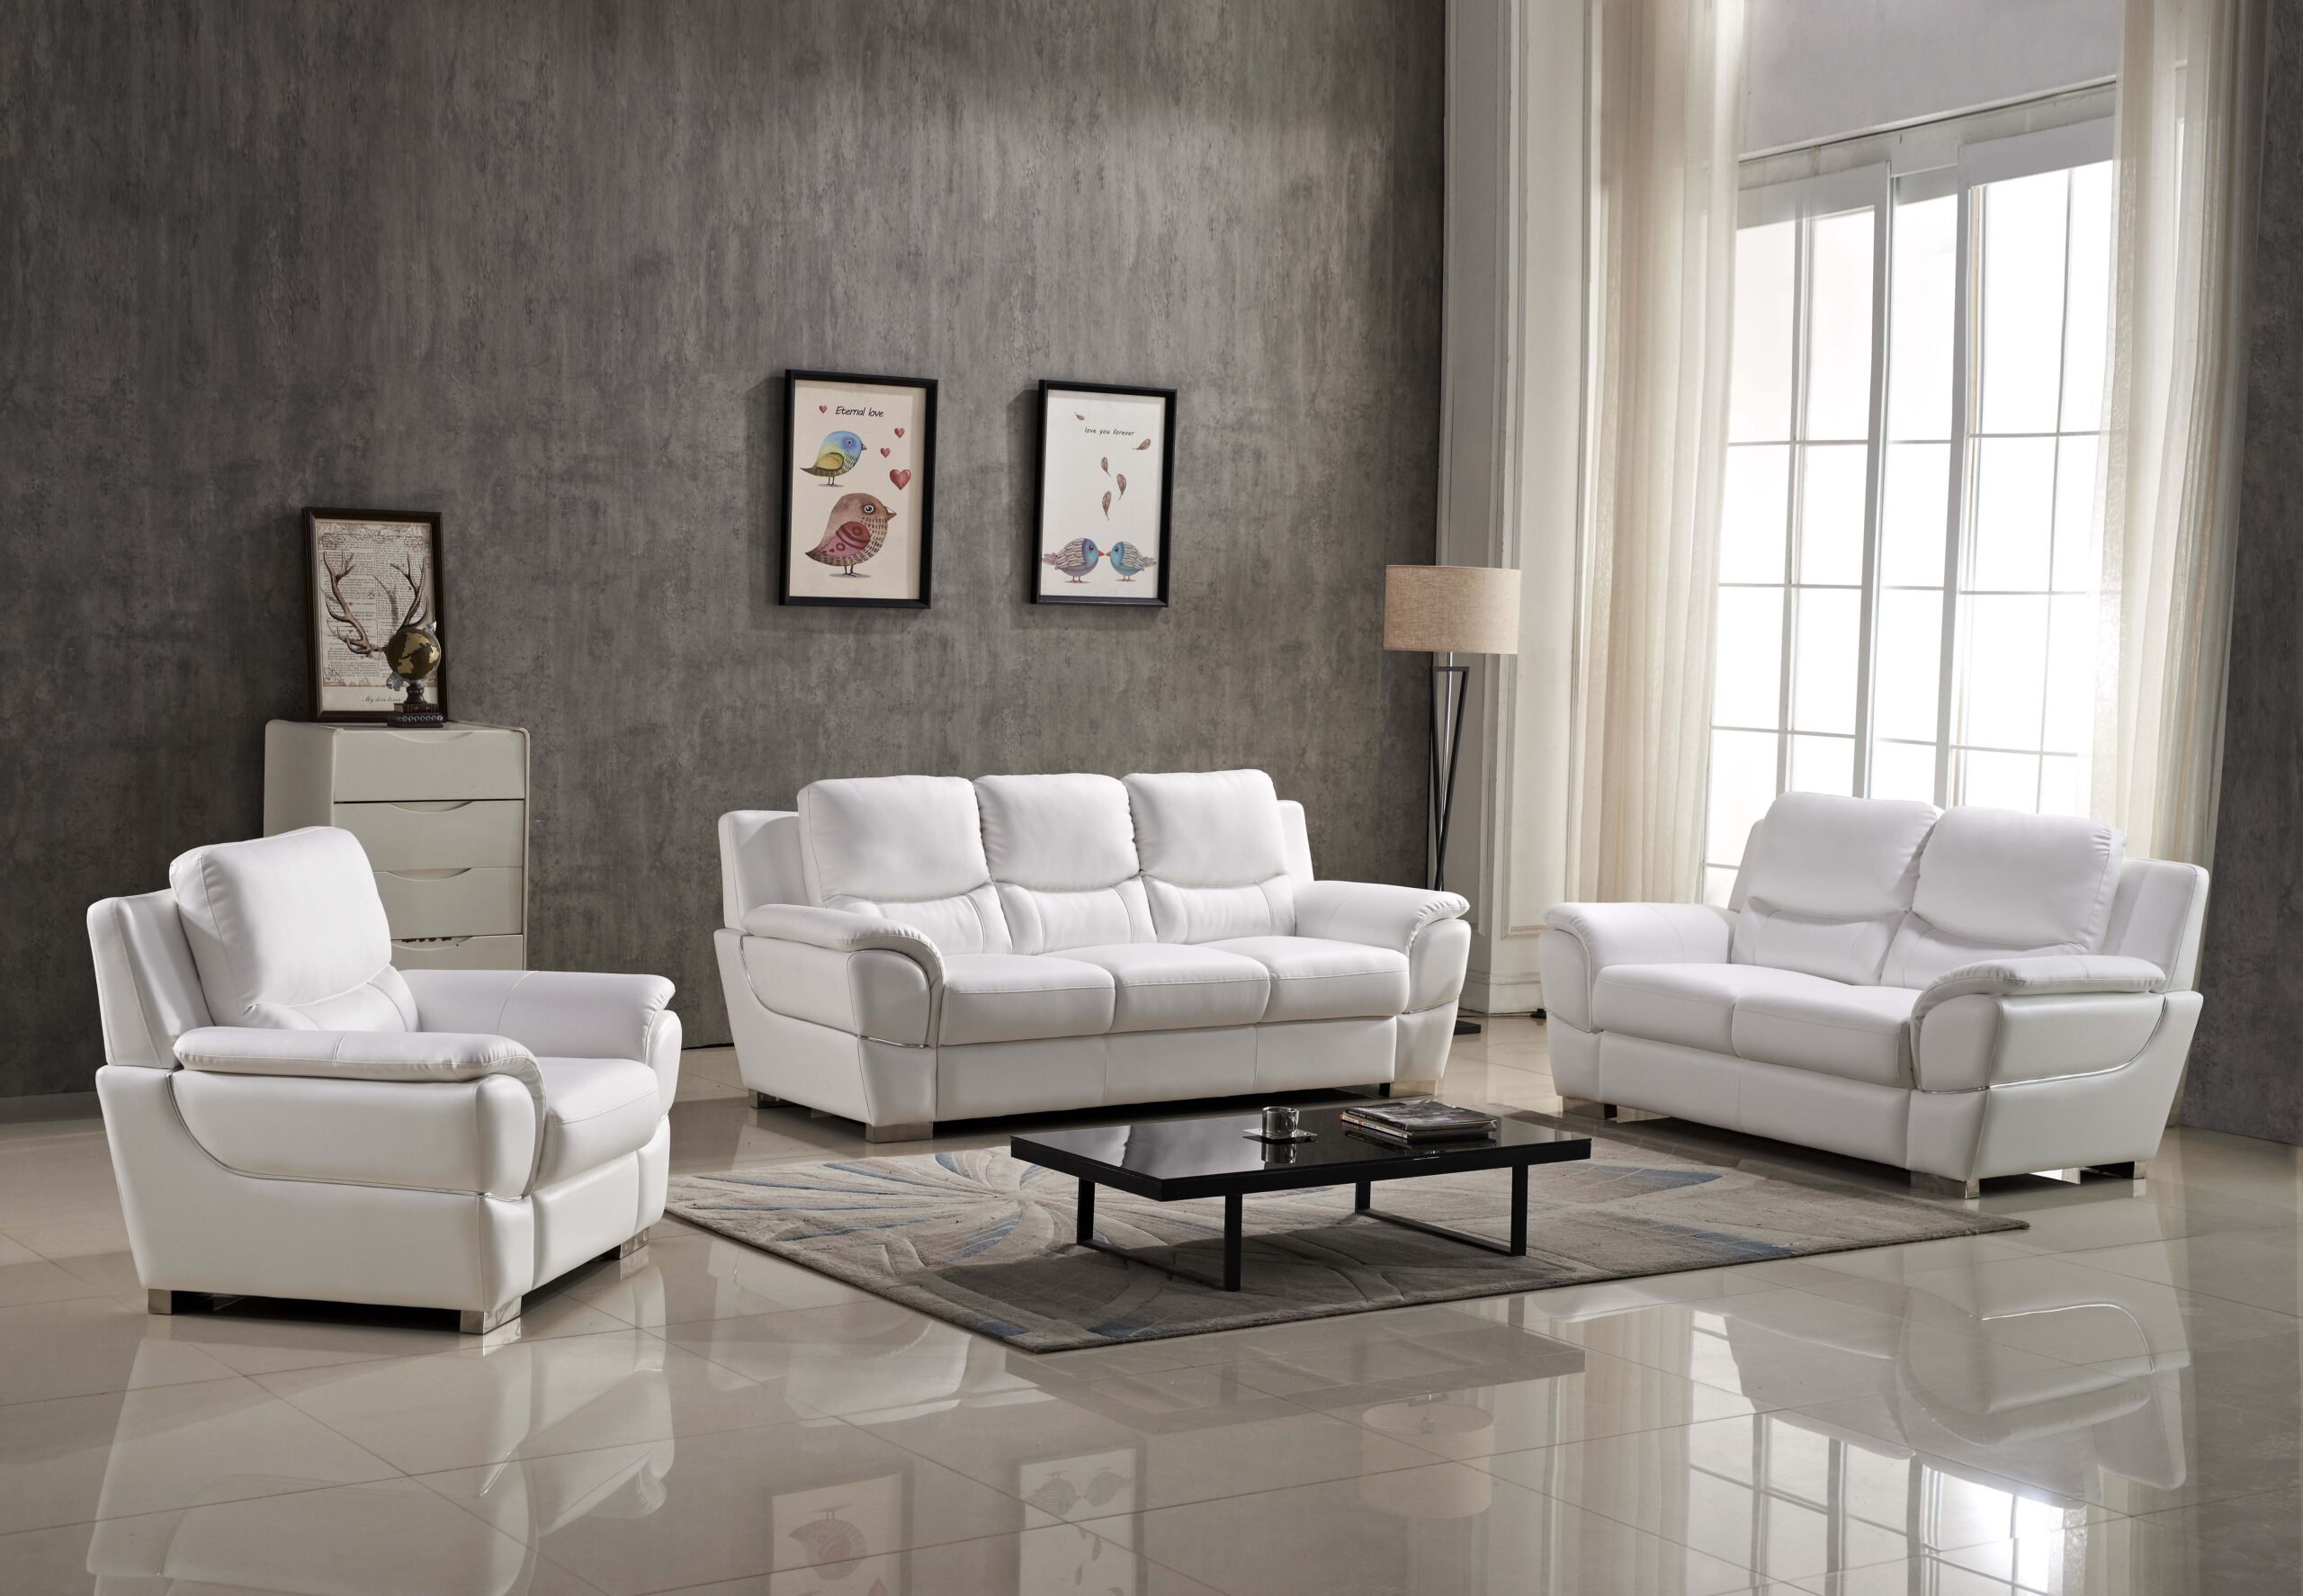 Kartier Leather Sofa Set White Matisseco